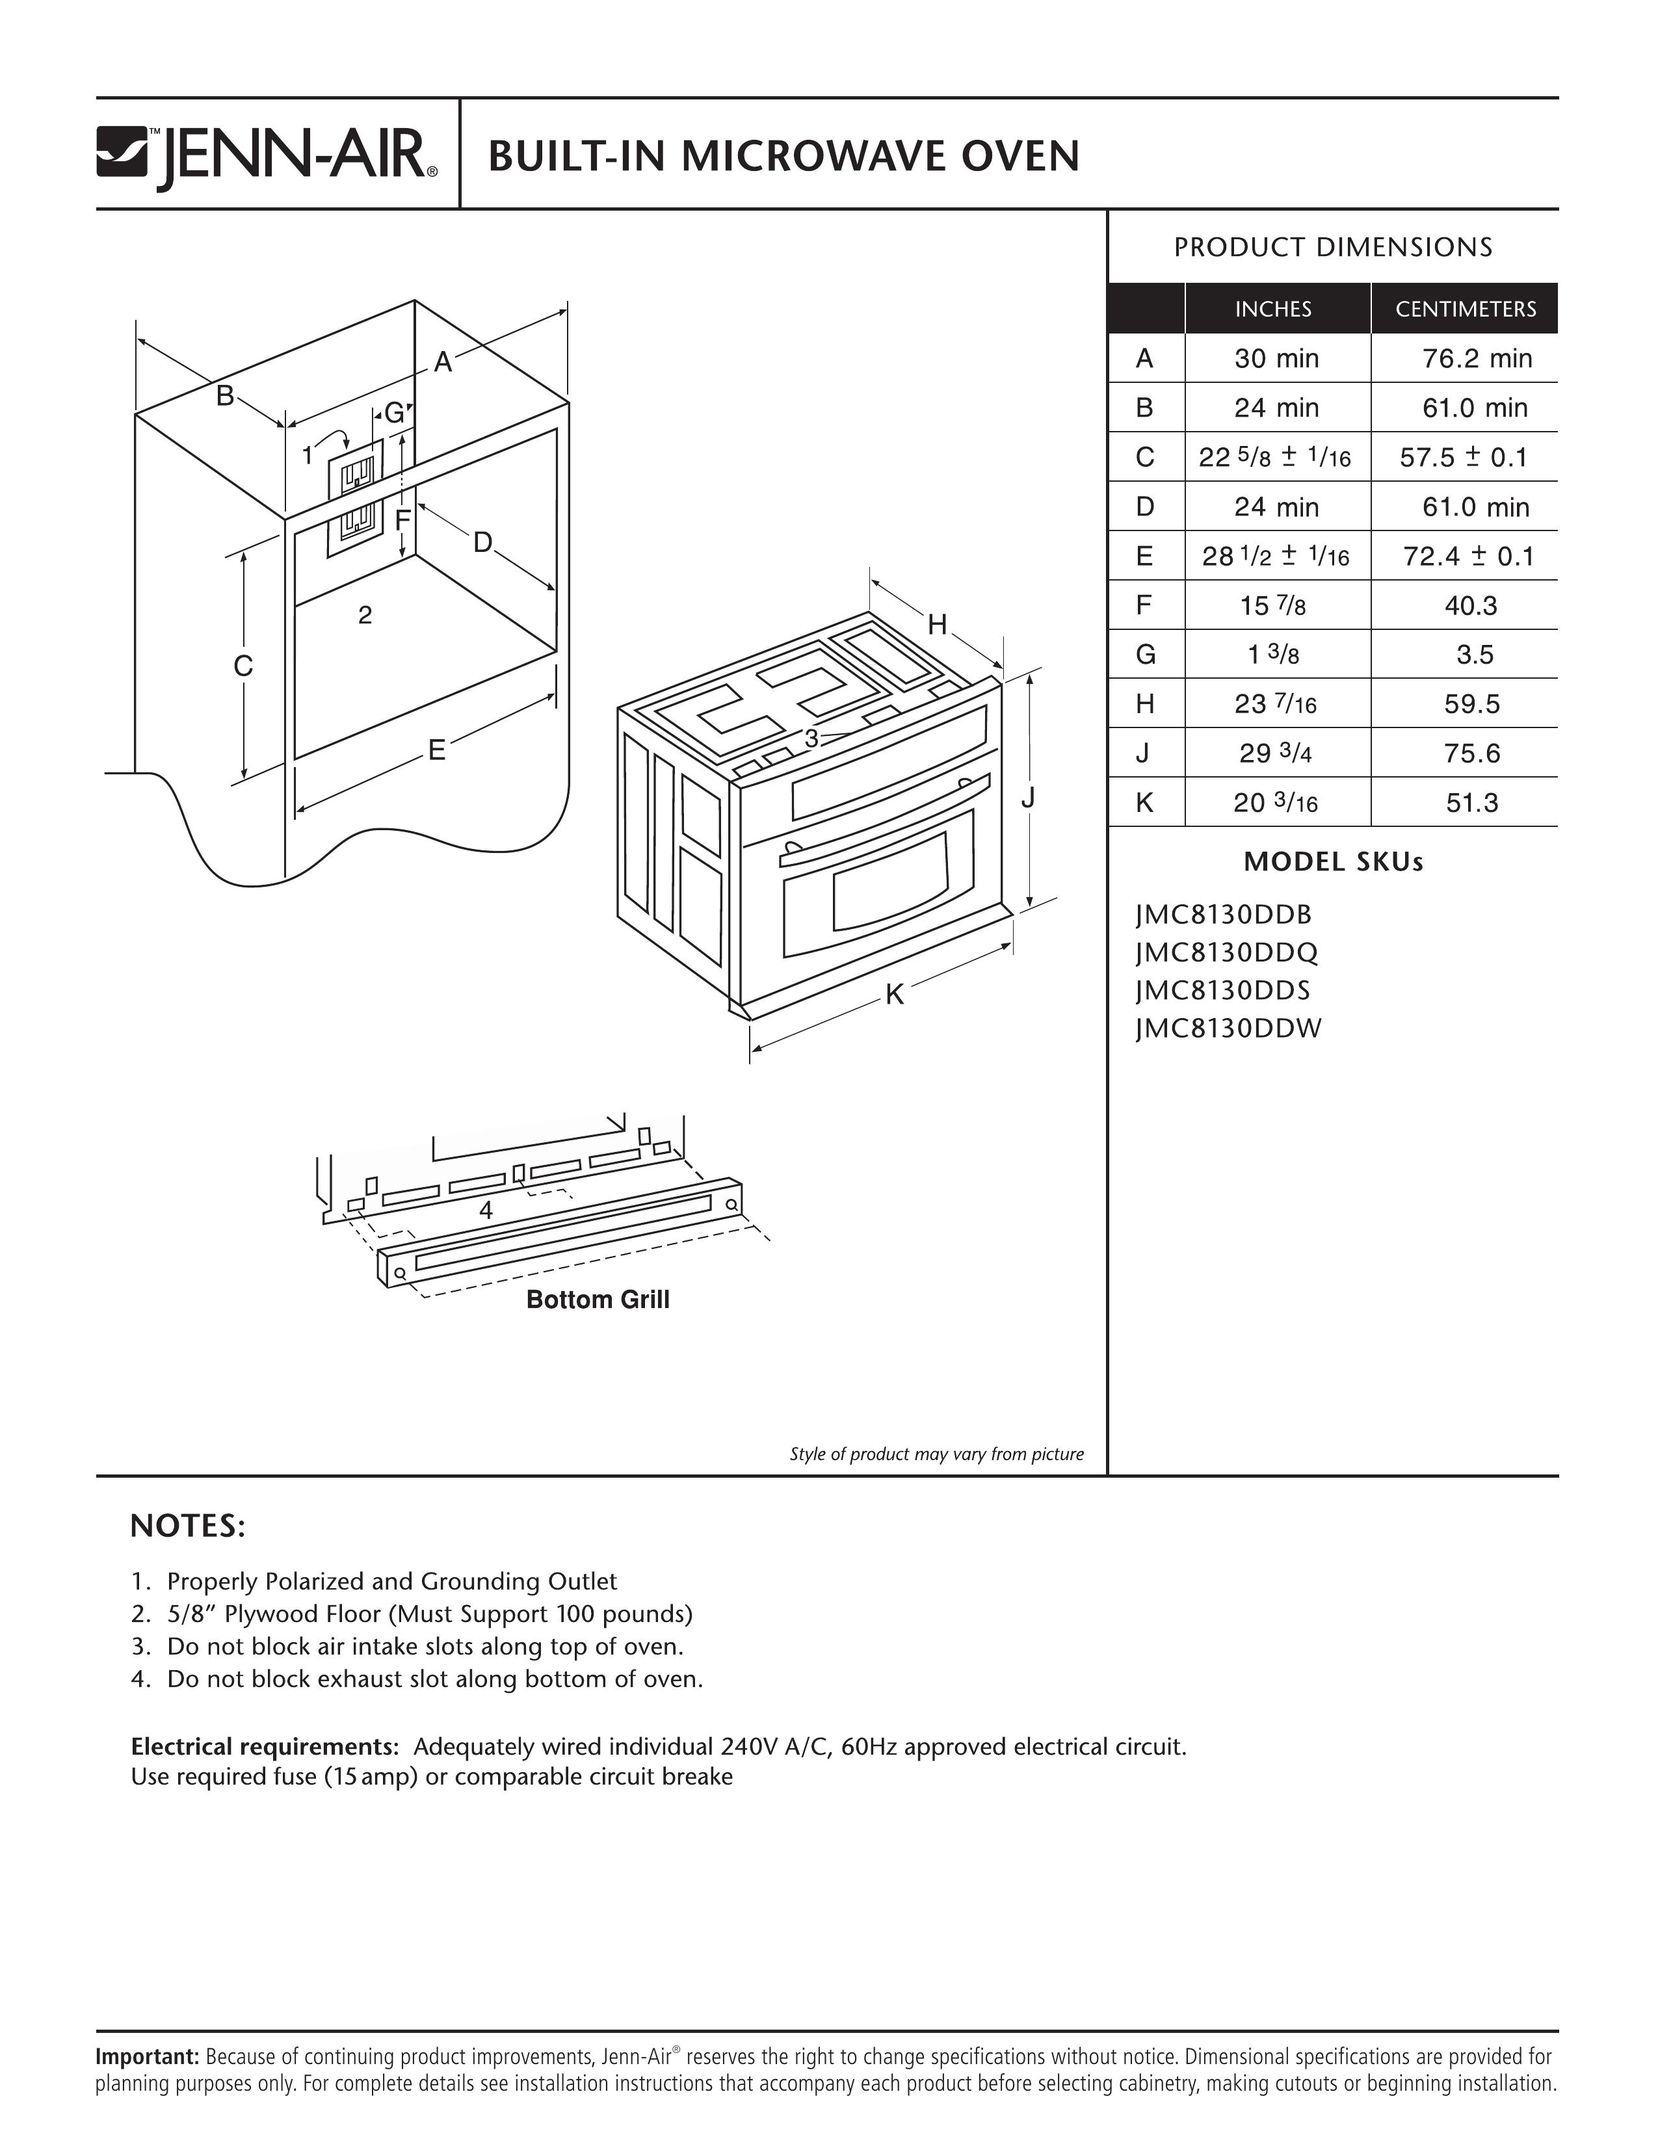 Jenn-Air JMC8130DDS Microwave Oven User Manual